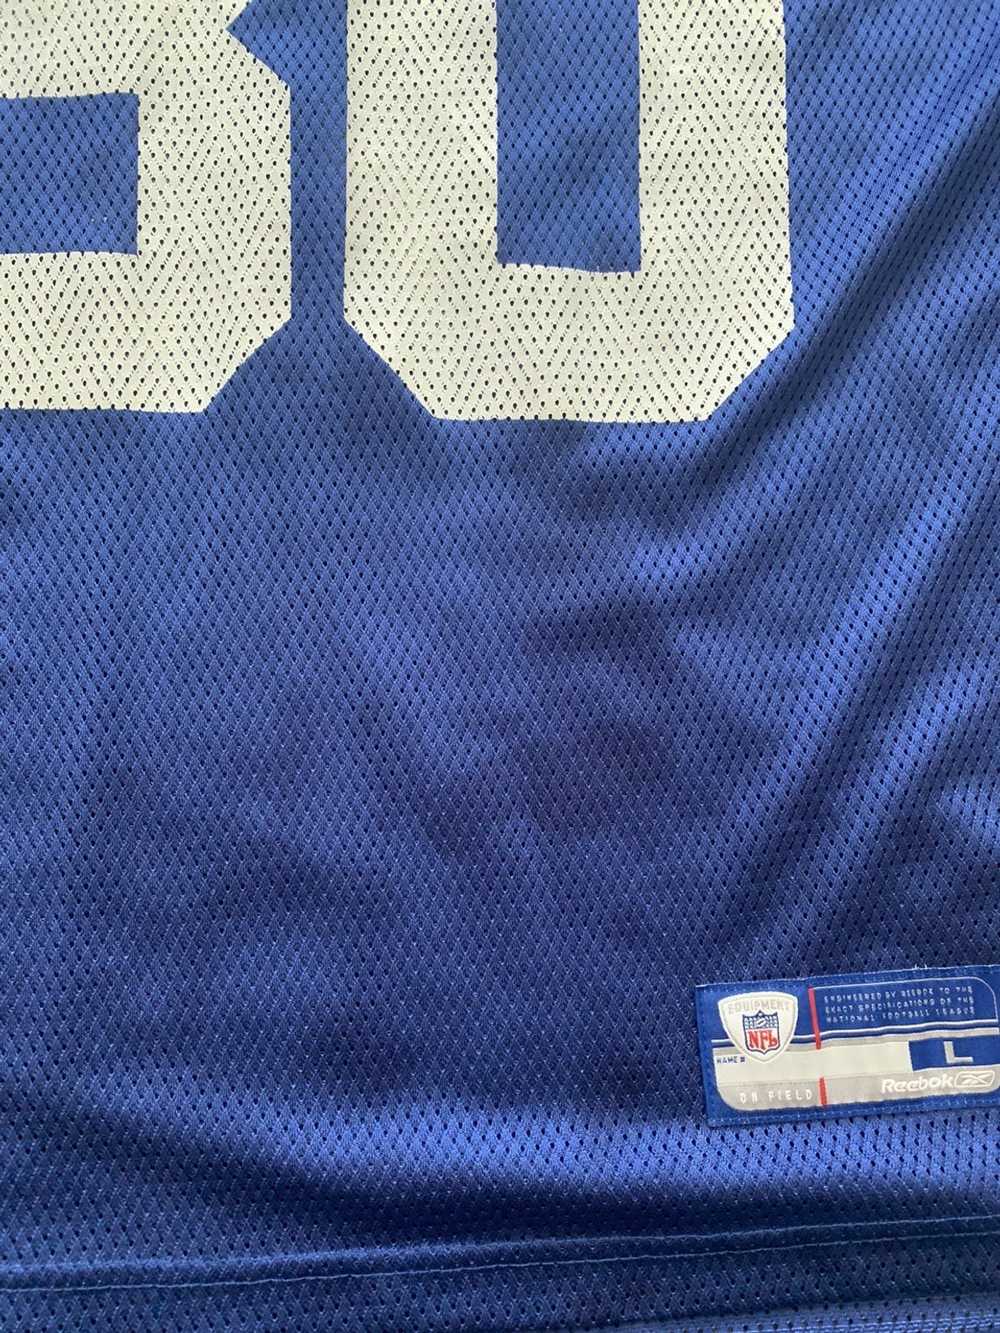 Jeremy Shockey player worn jersey patch football card (New York Giants)  2005 Upper Deck ESPN SportsCenter #SCSJS